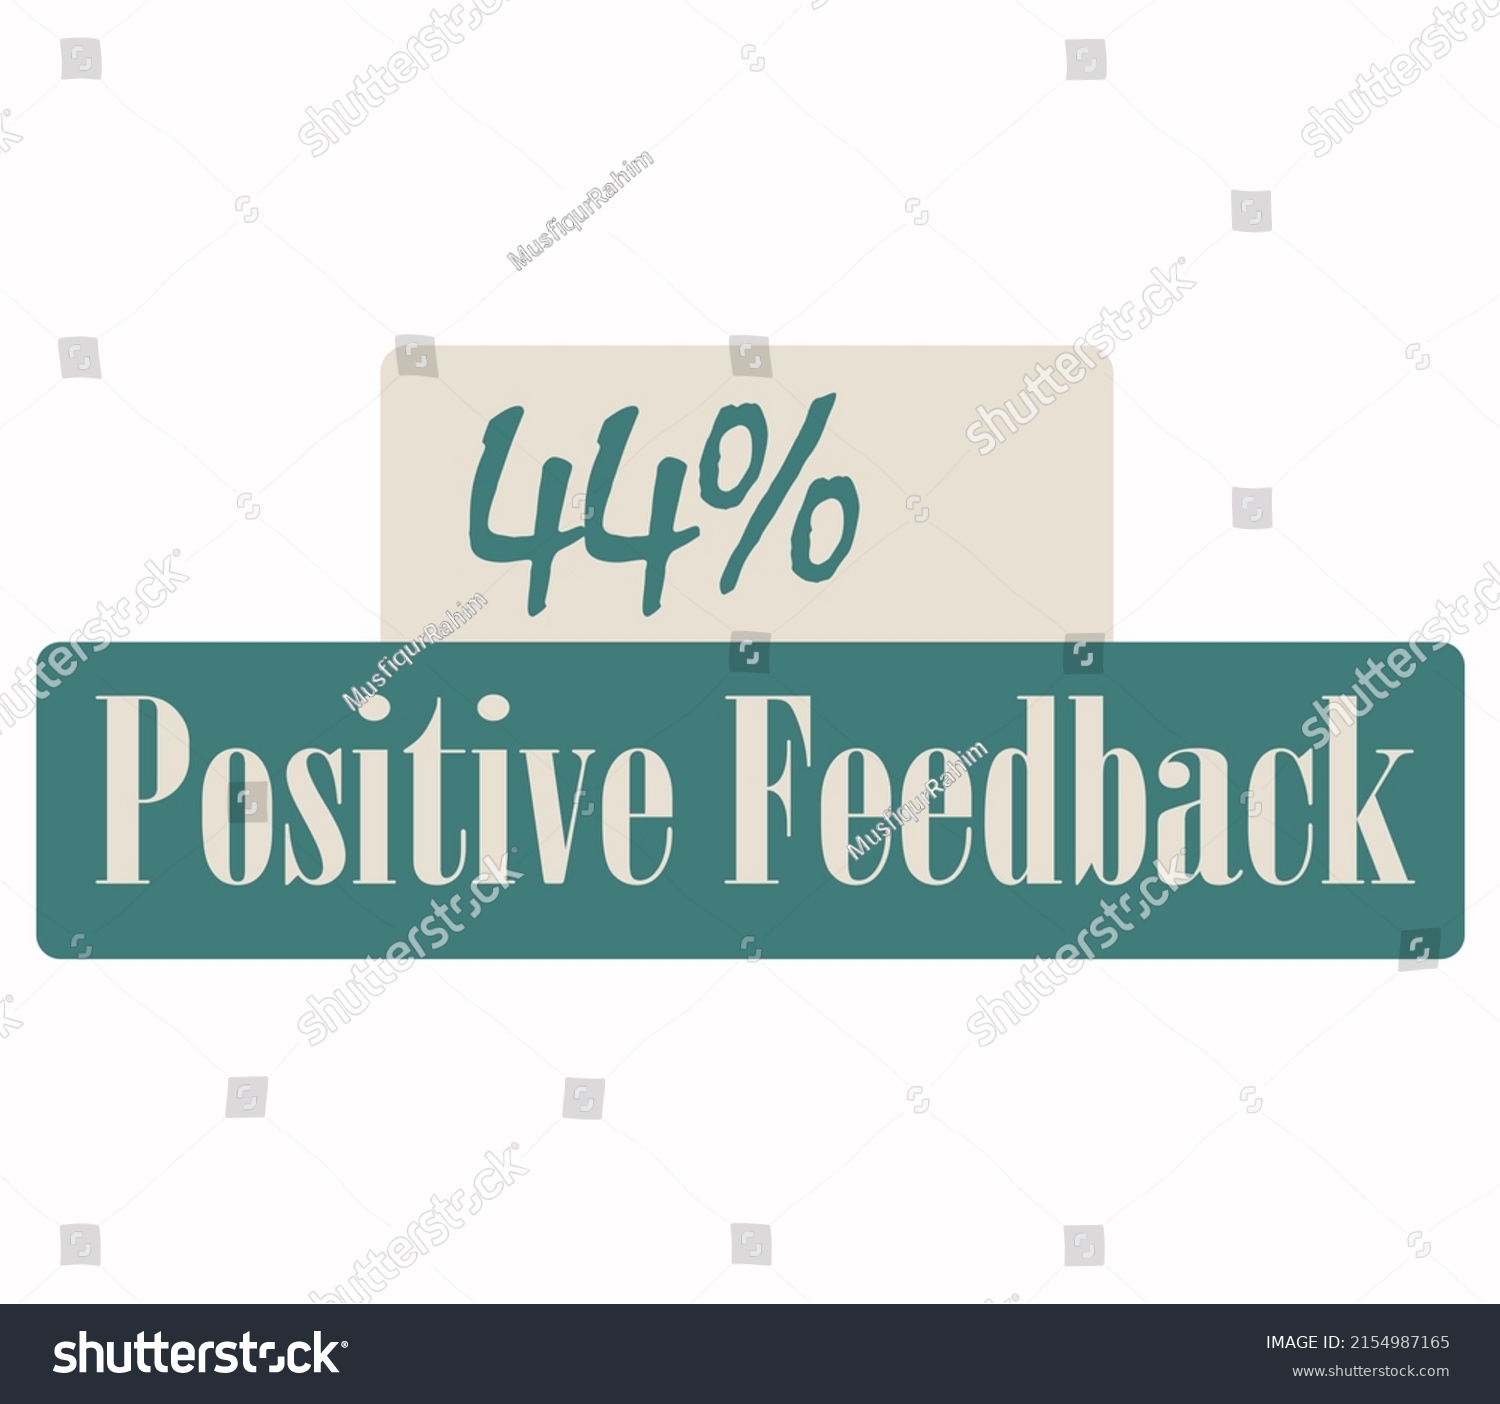 44% percentage positive feedback sign label vector art illustration with fantastic serif font and green color #2154987165